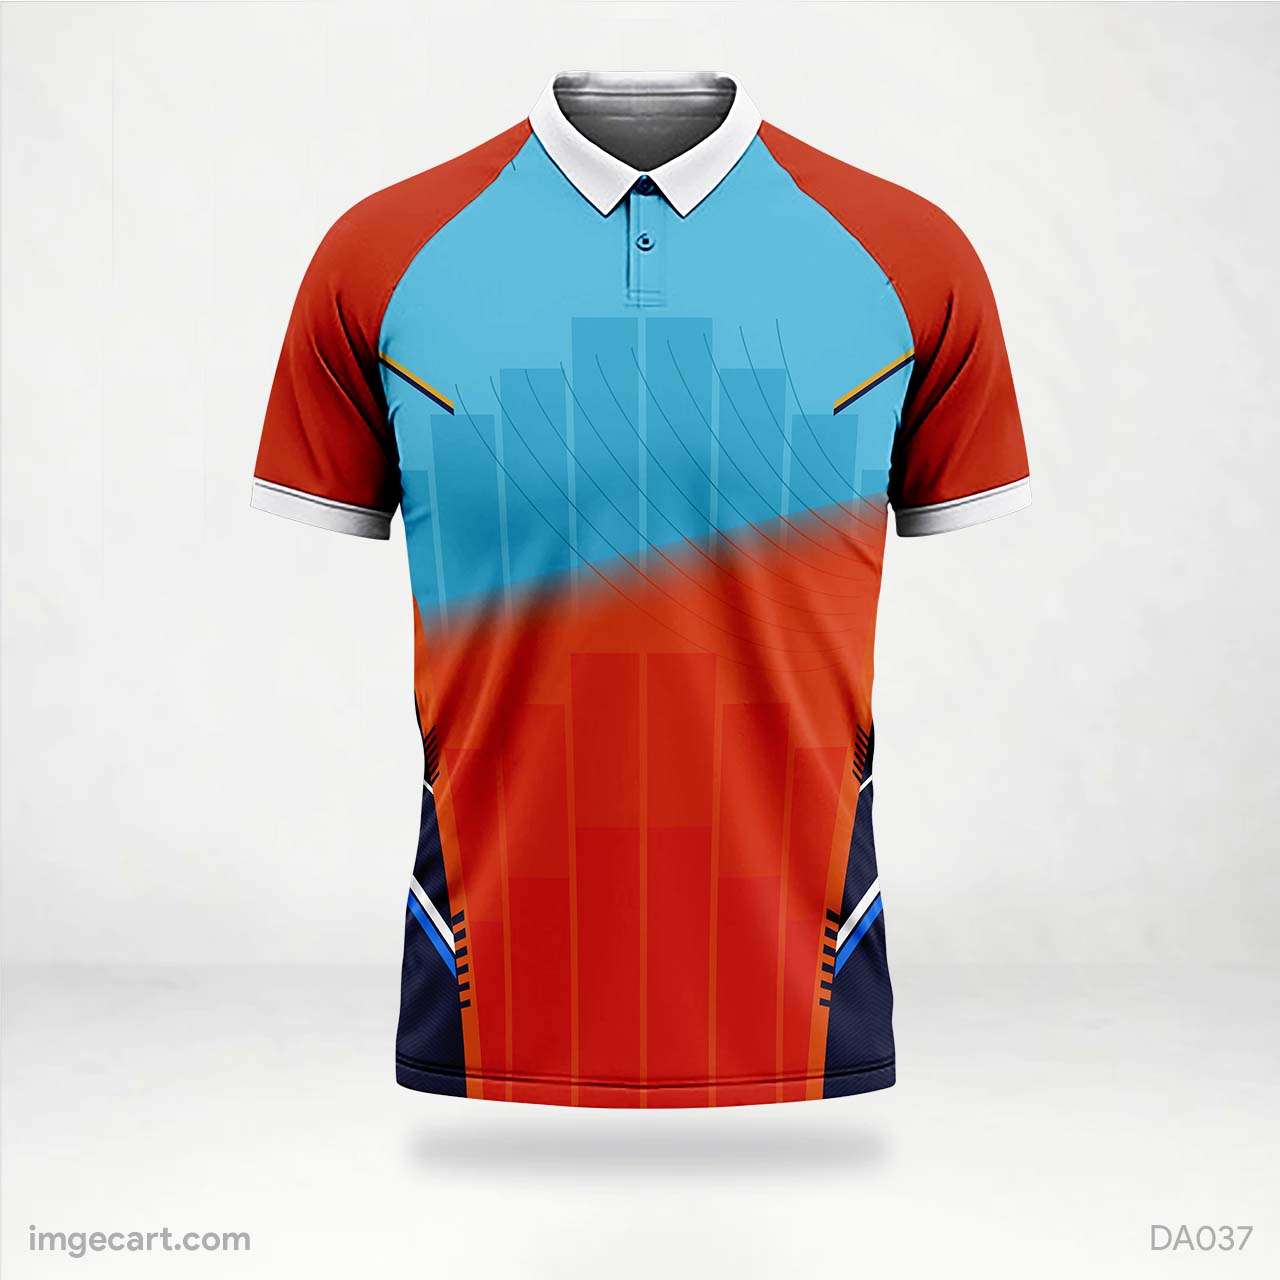 Cricket Jersey design Orange and Blue - imgecart